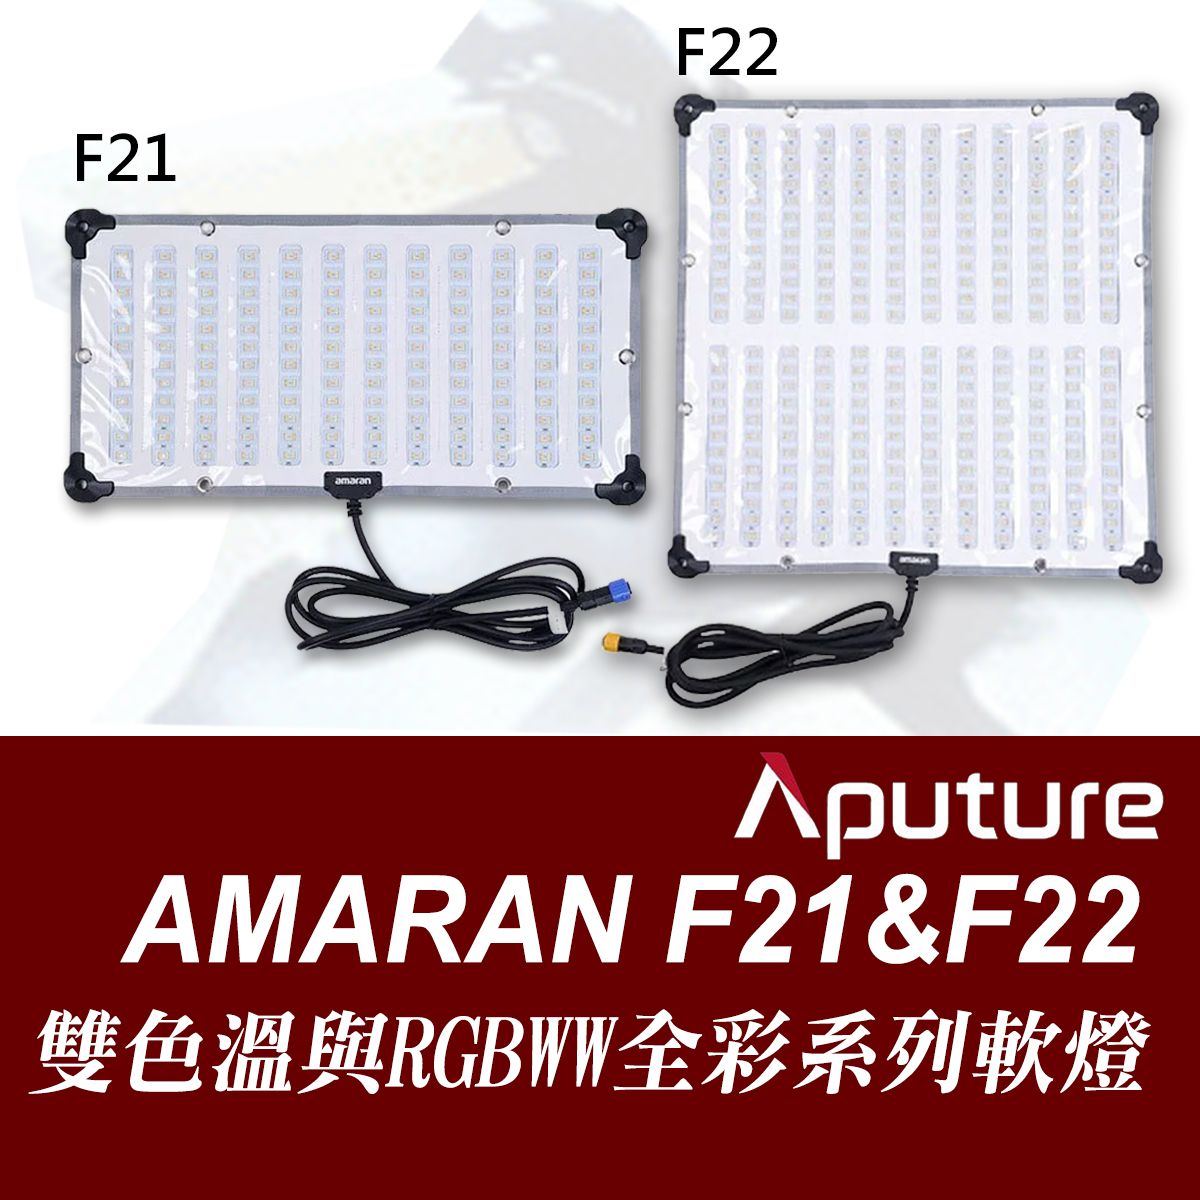 APUTURE amaran F21&F22 雙色溫與RGBWW全彩系列軟版燈